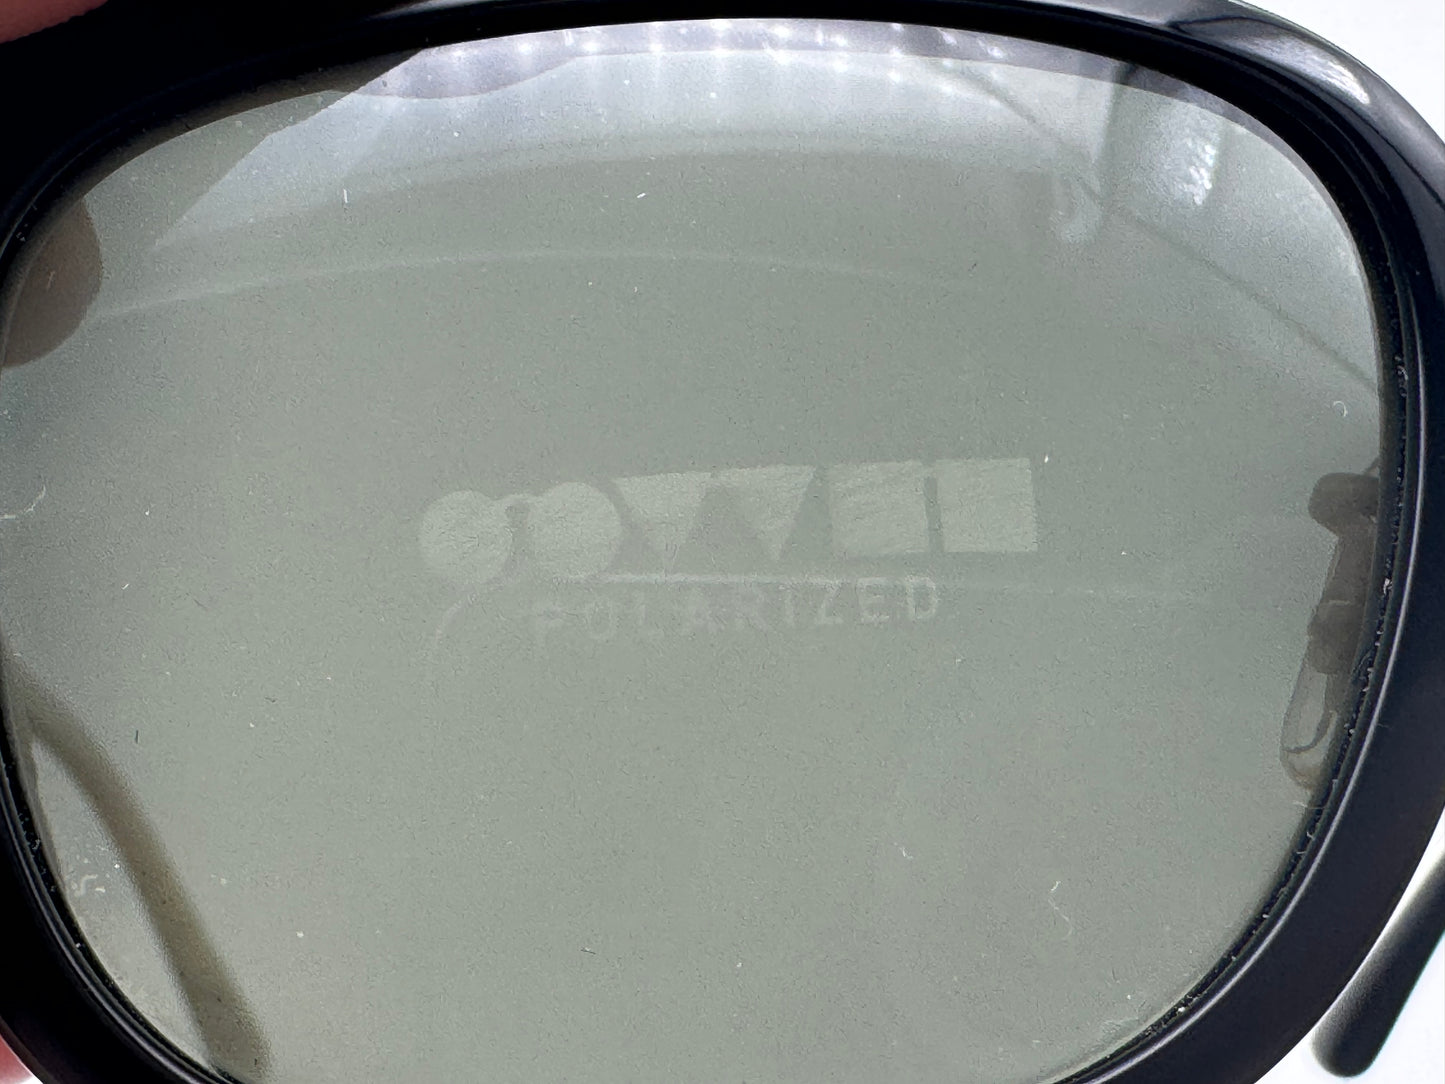 Oliver Peoples Kettner 52mm Black G 15 Polarized lens OV 5339 s 1005P1 Preowned